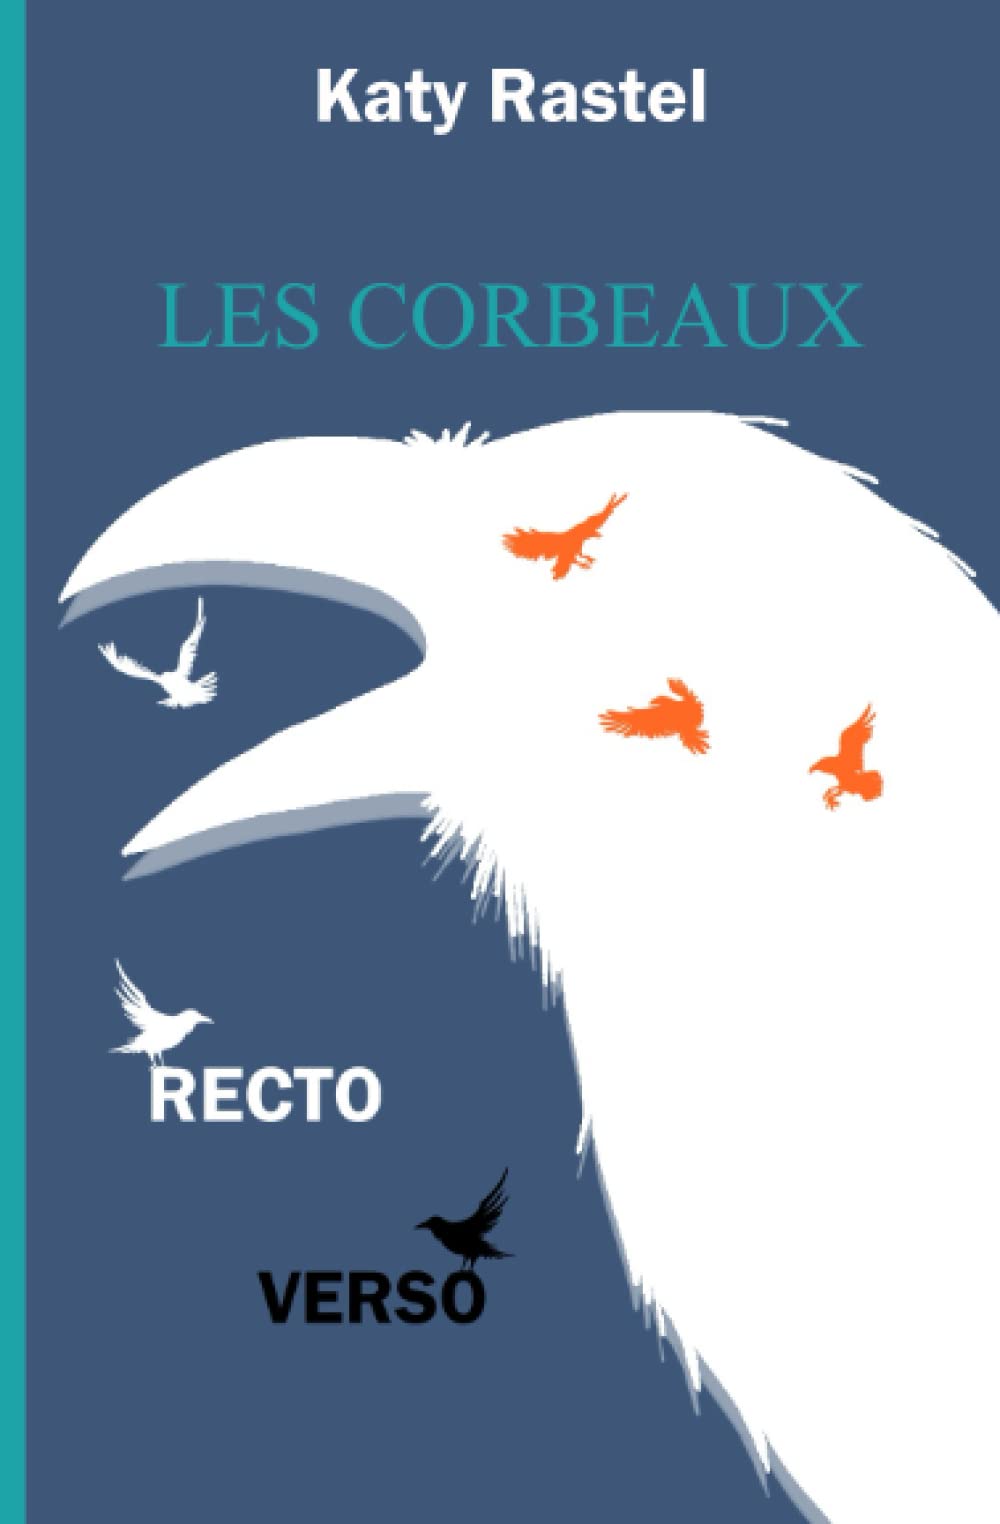 Le livre « Les Corbeaux : recto-verso » de Katy Rastel